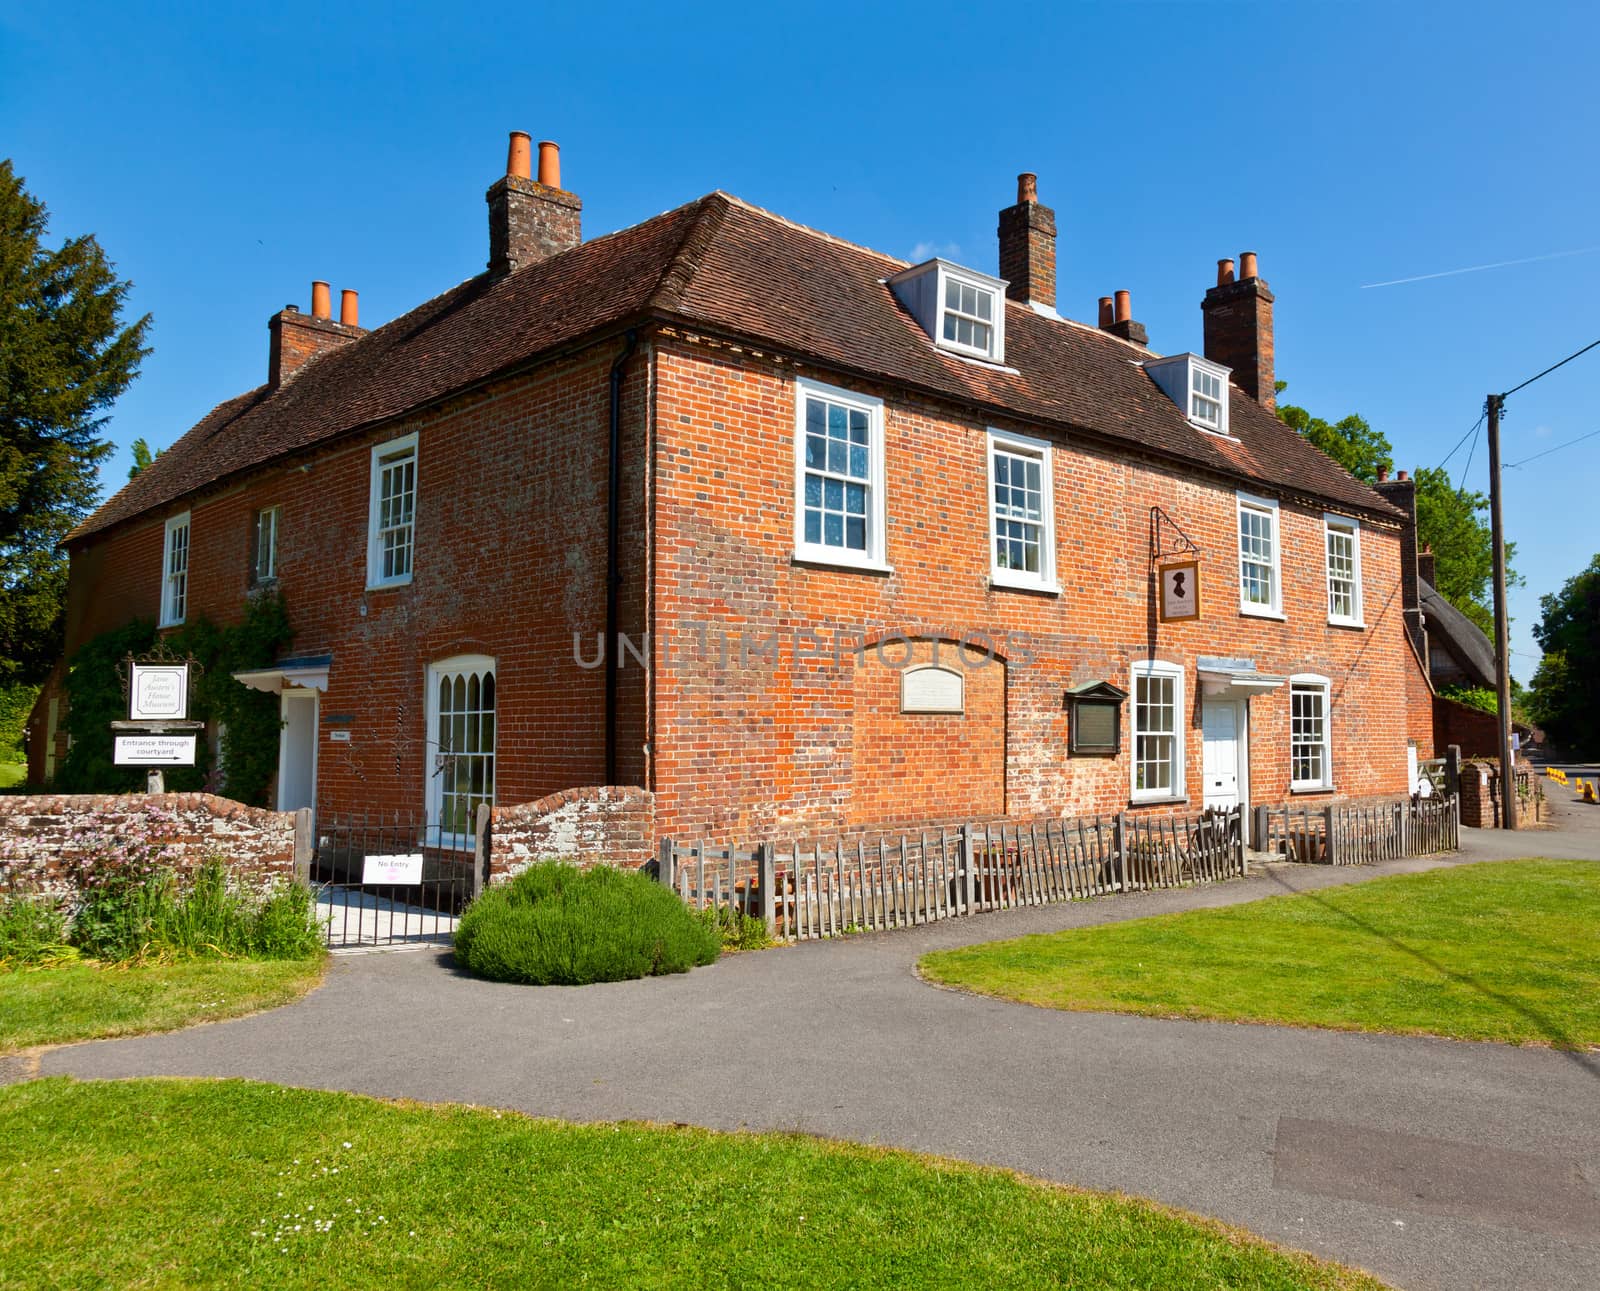 Jane Austen's House Museum in Chawton, England